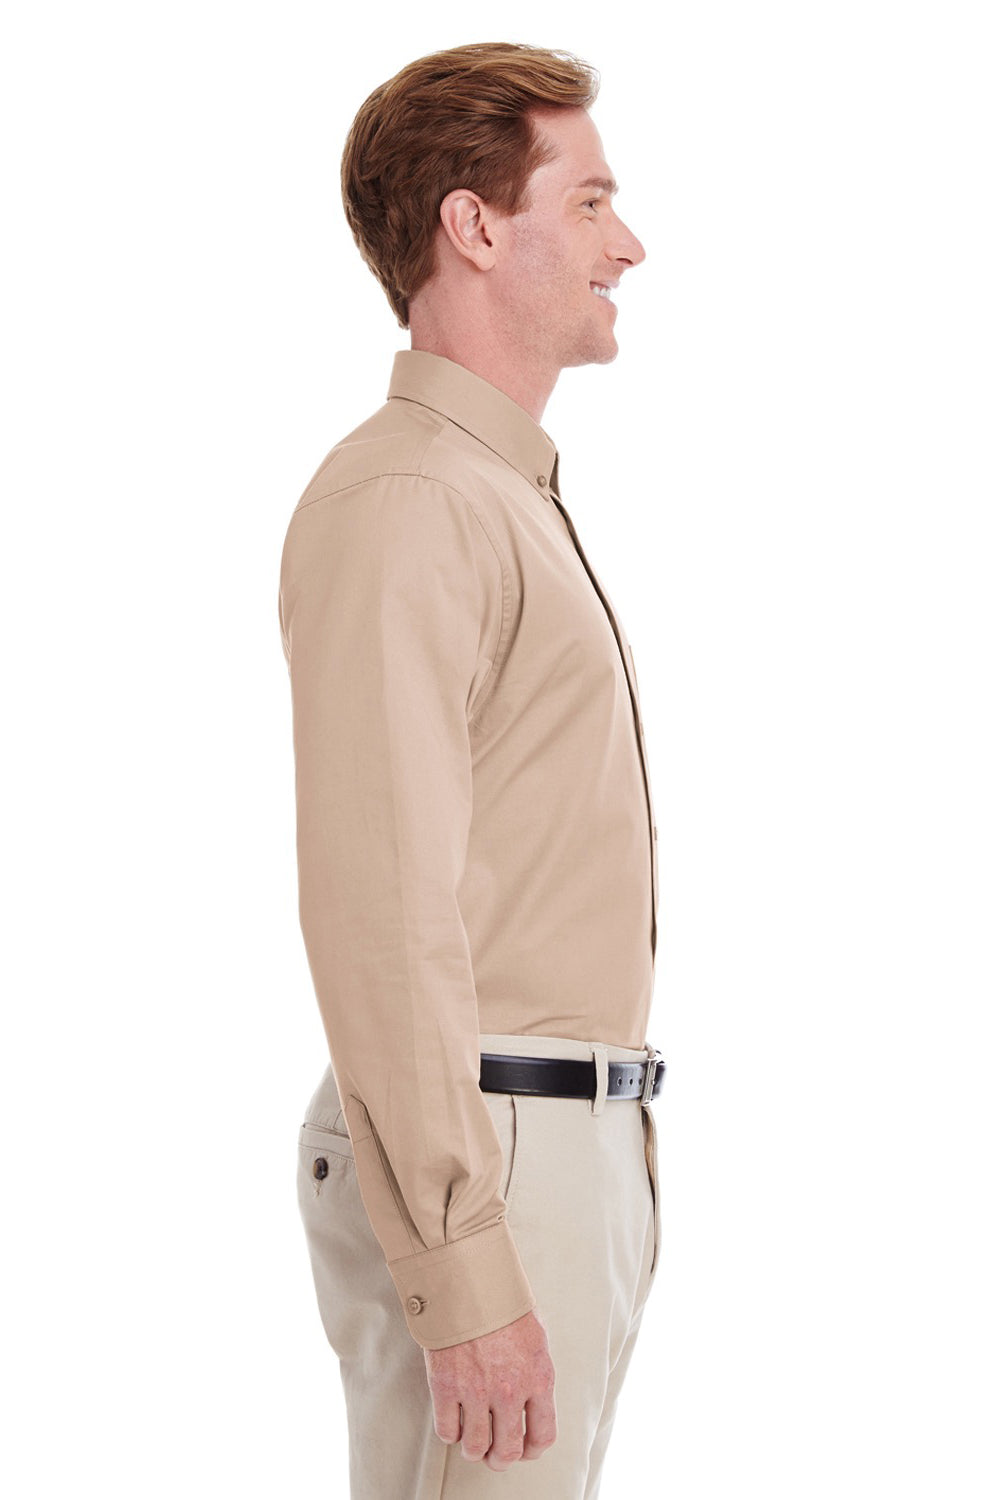 Harriton M581 Mens Foundation Stain Resistant Long Sleeve Button Down Shirt w/ Pocket Khaki Brown Side